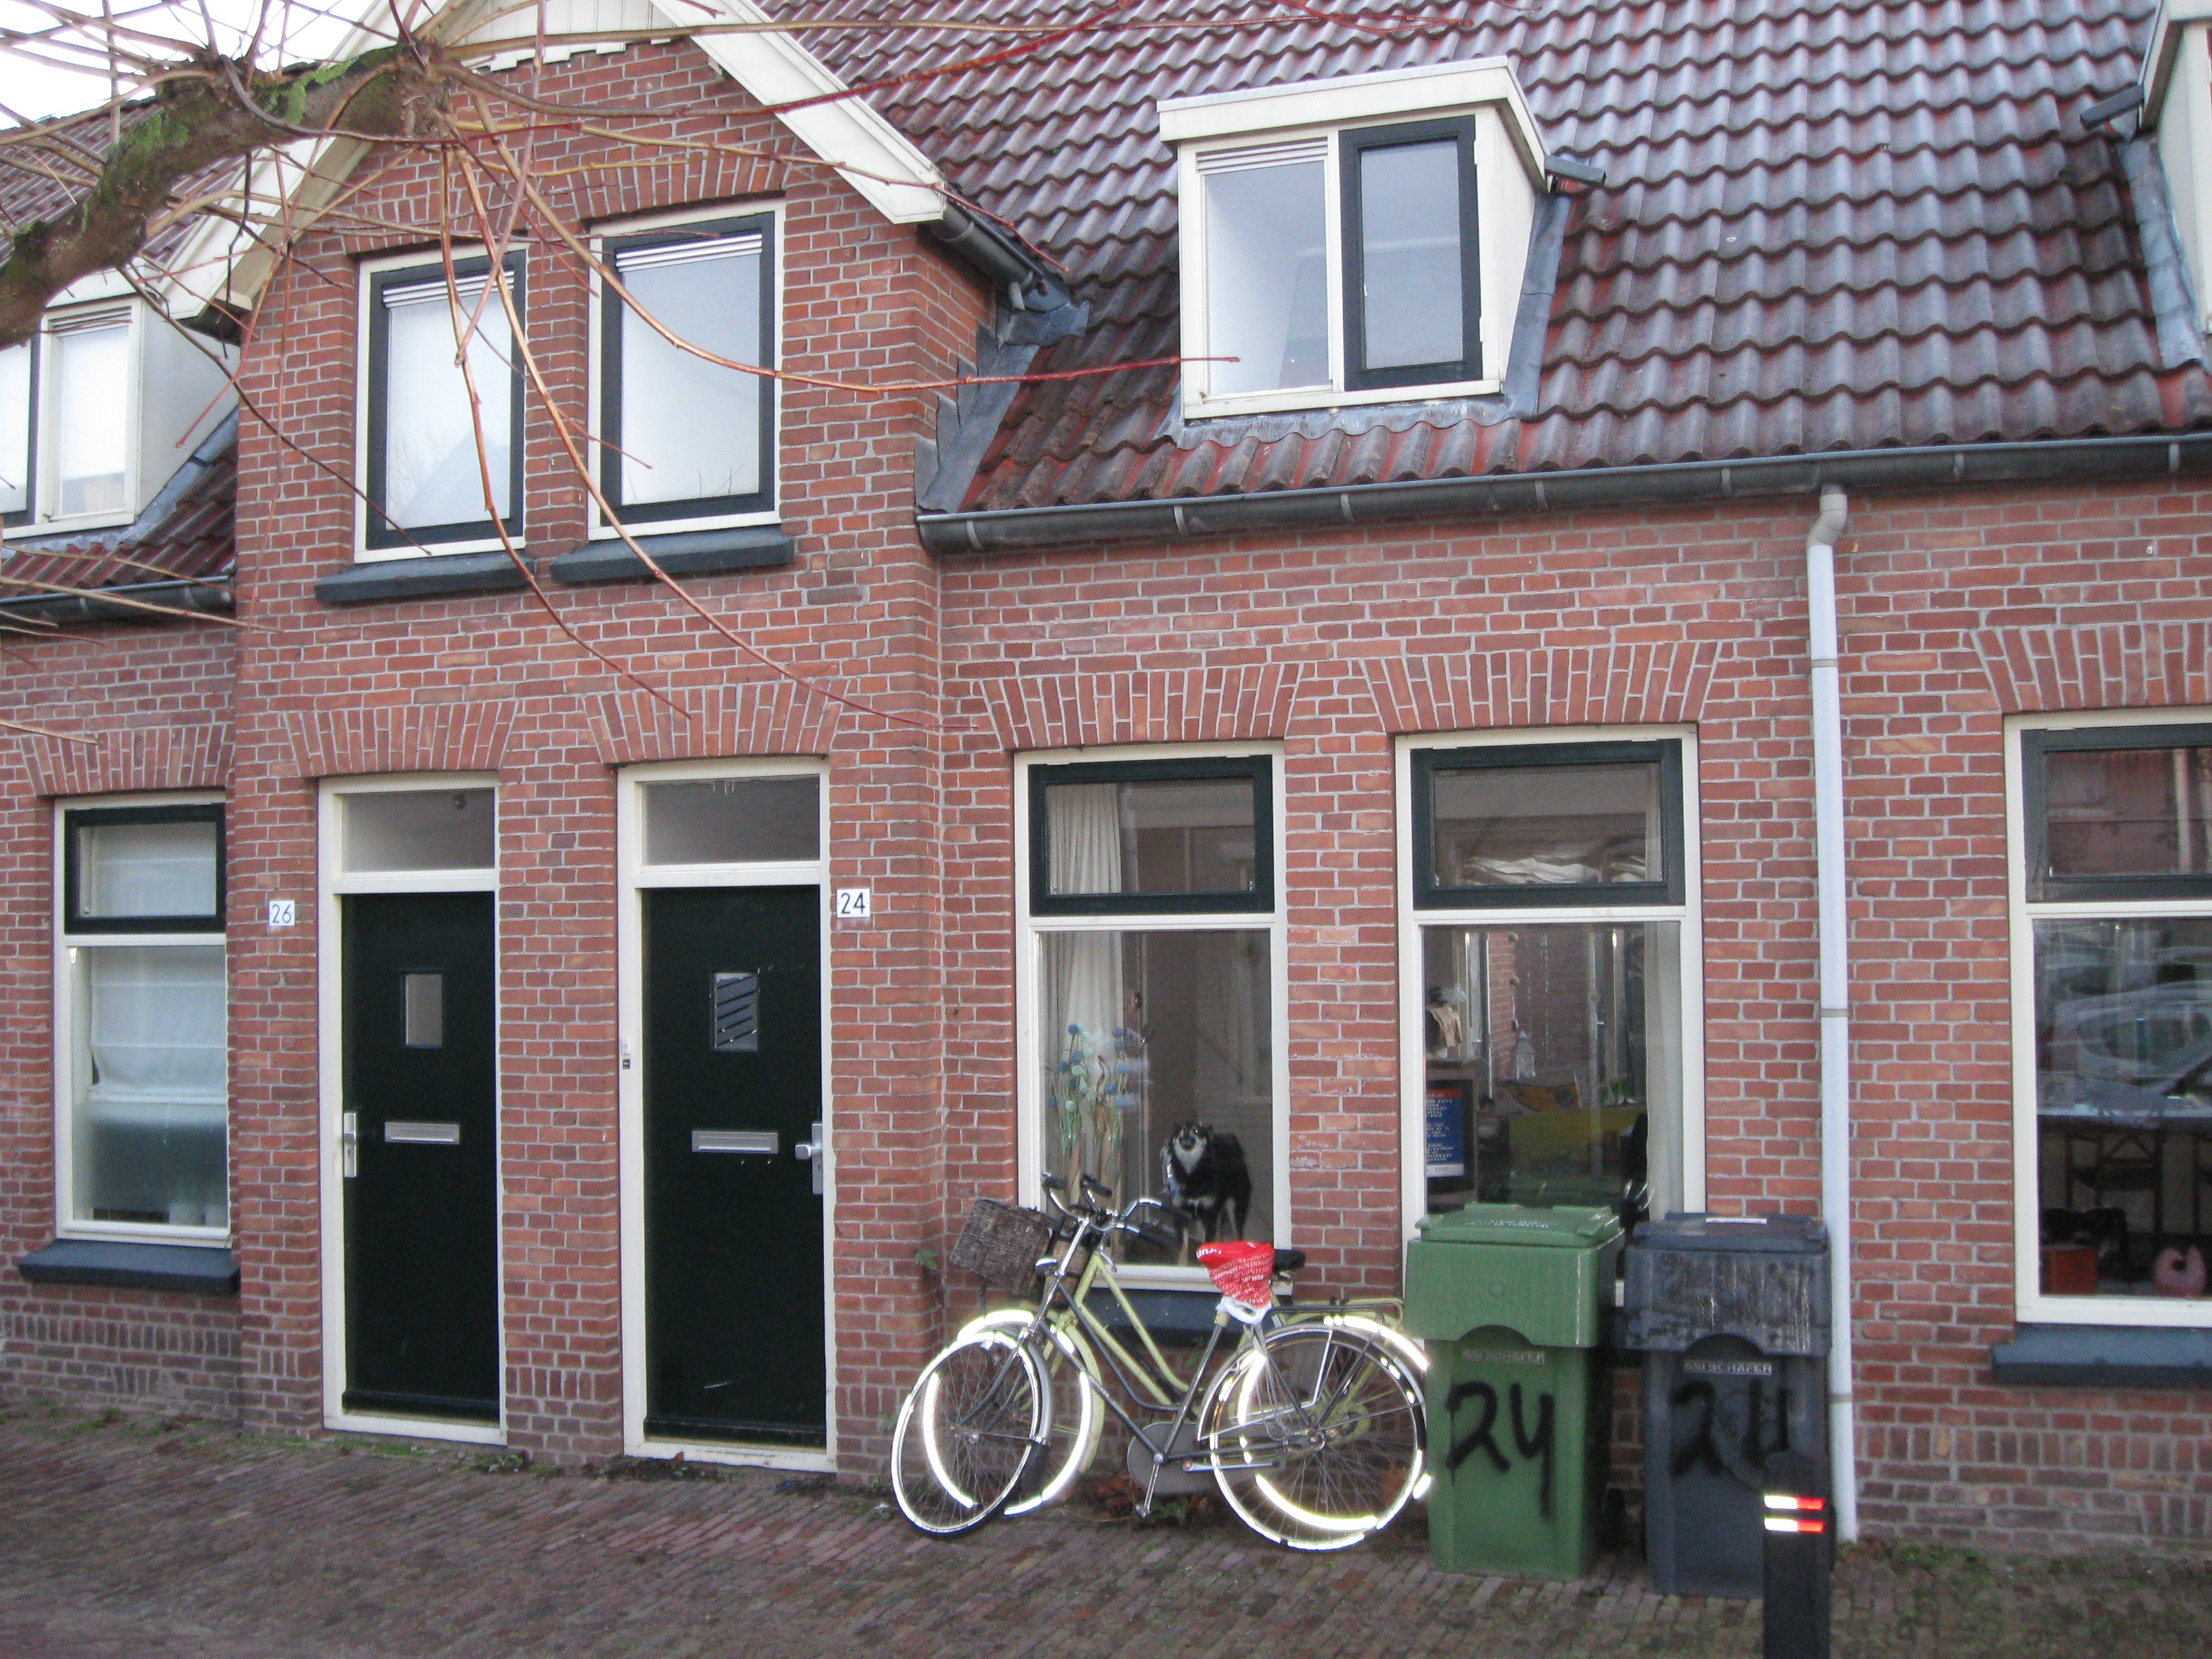 Riouwstraat 24, 7942 VT Meppel, Nederland